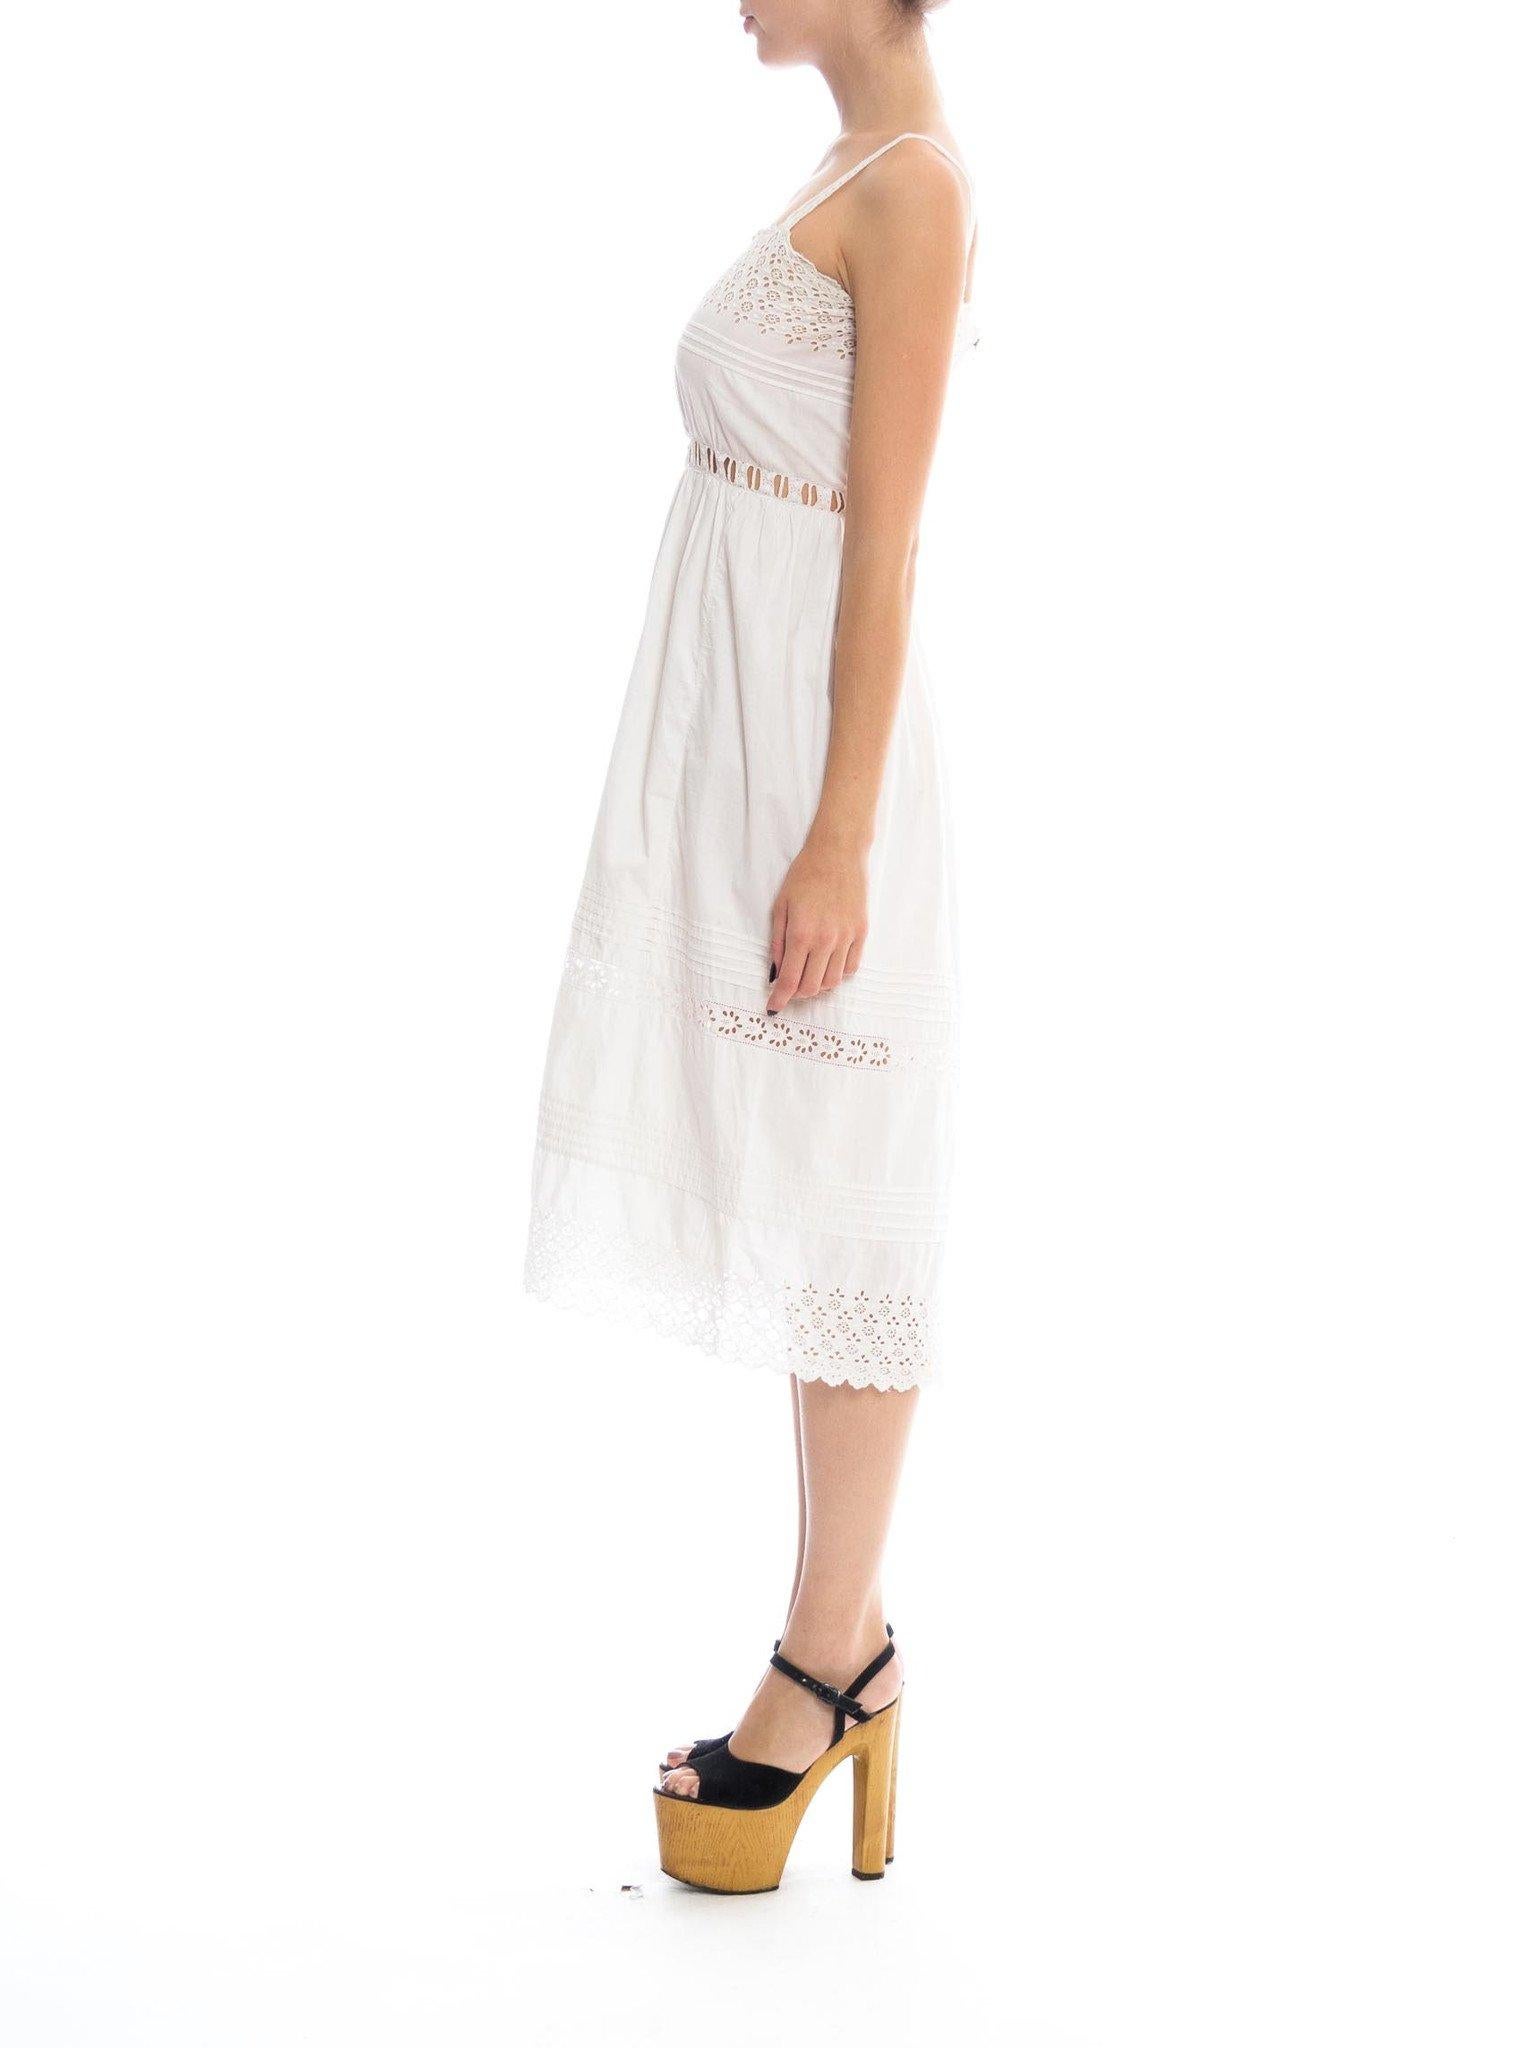 Women's Edwardian White Cotton Eyelet Lace Clean & Simple Summer Dress